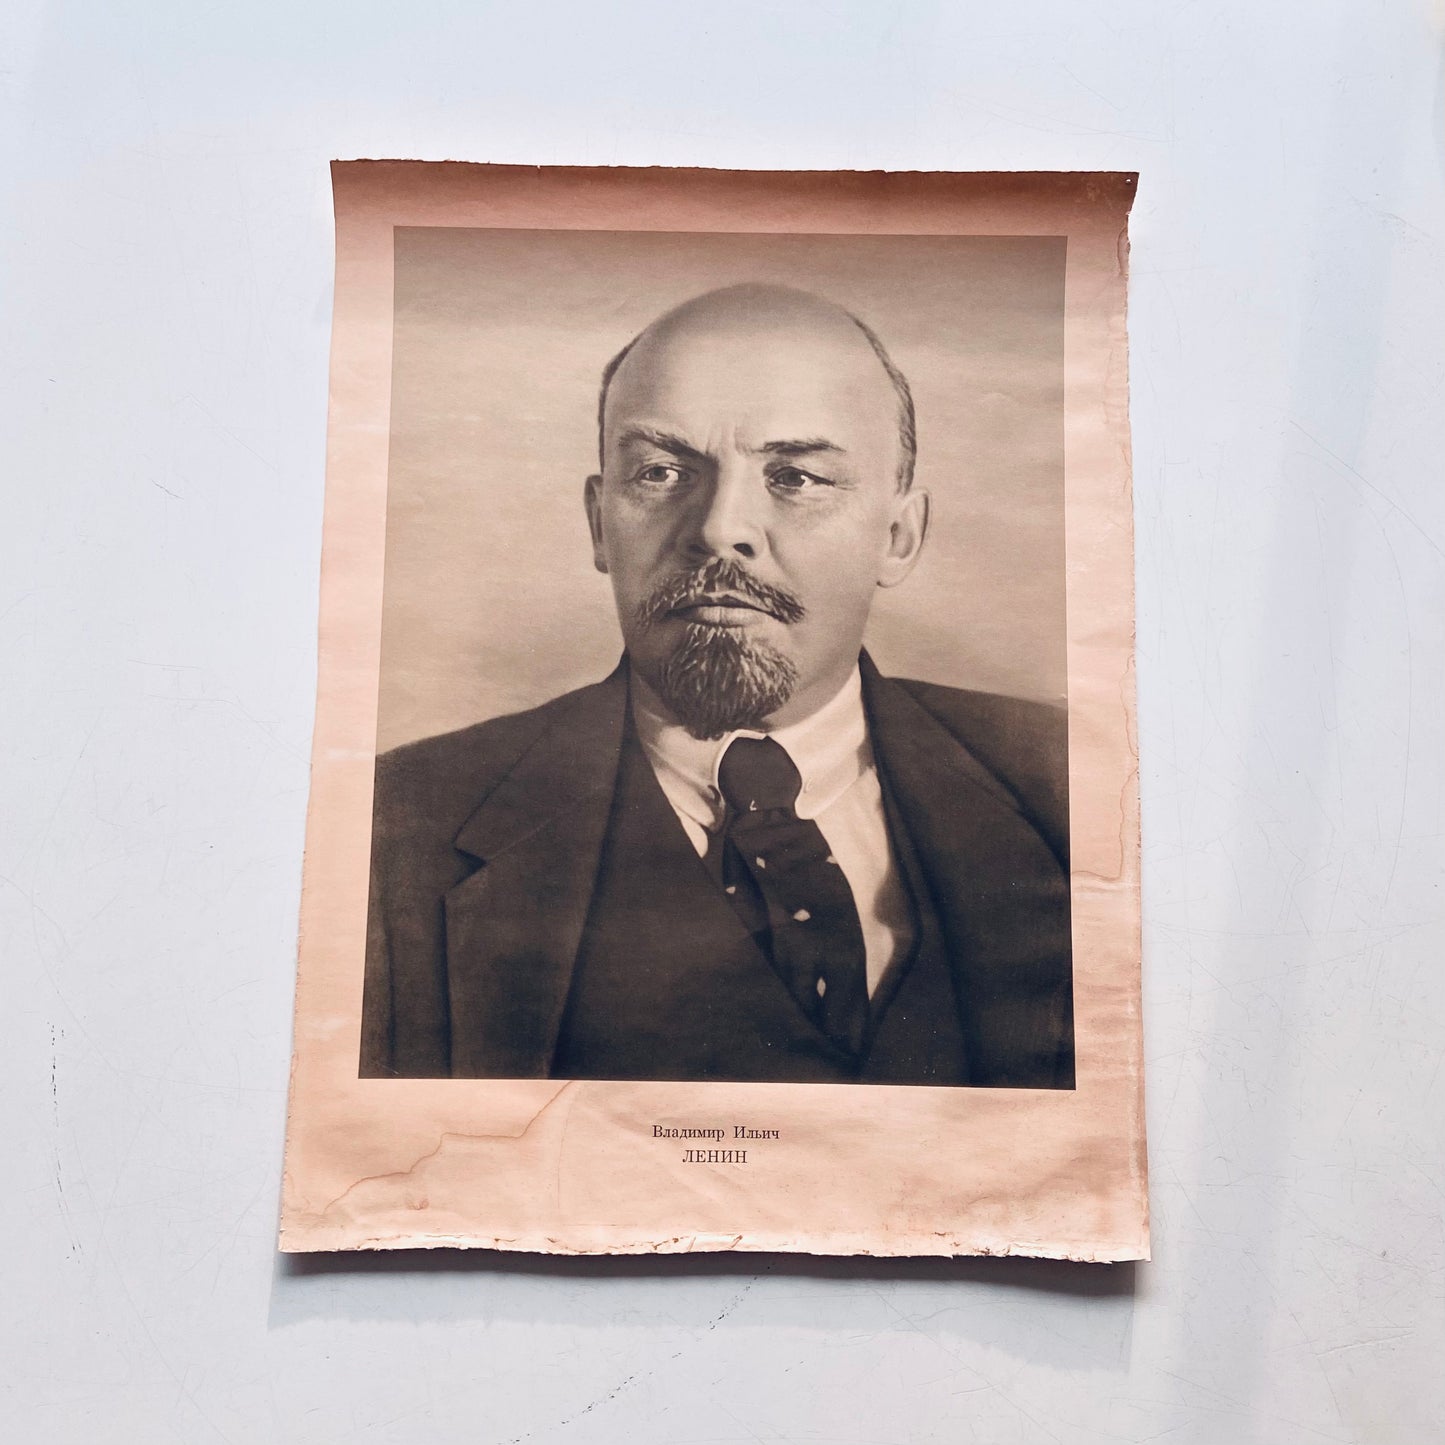 Photo, Vladimir Lenin, Russia / USSR (CCCP), by Pyotr Otsup (1918), print from 1950s